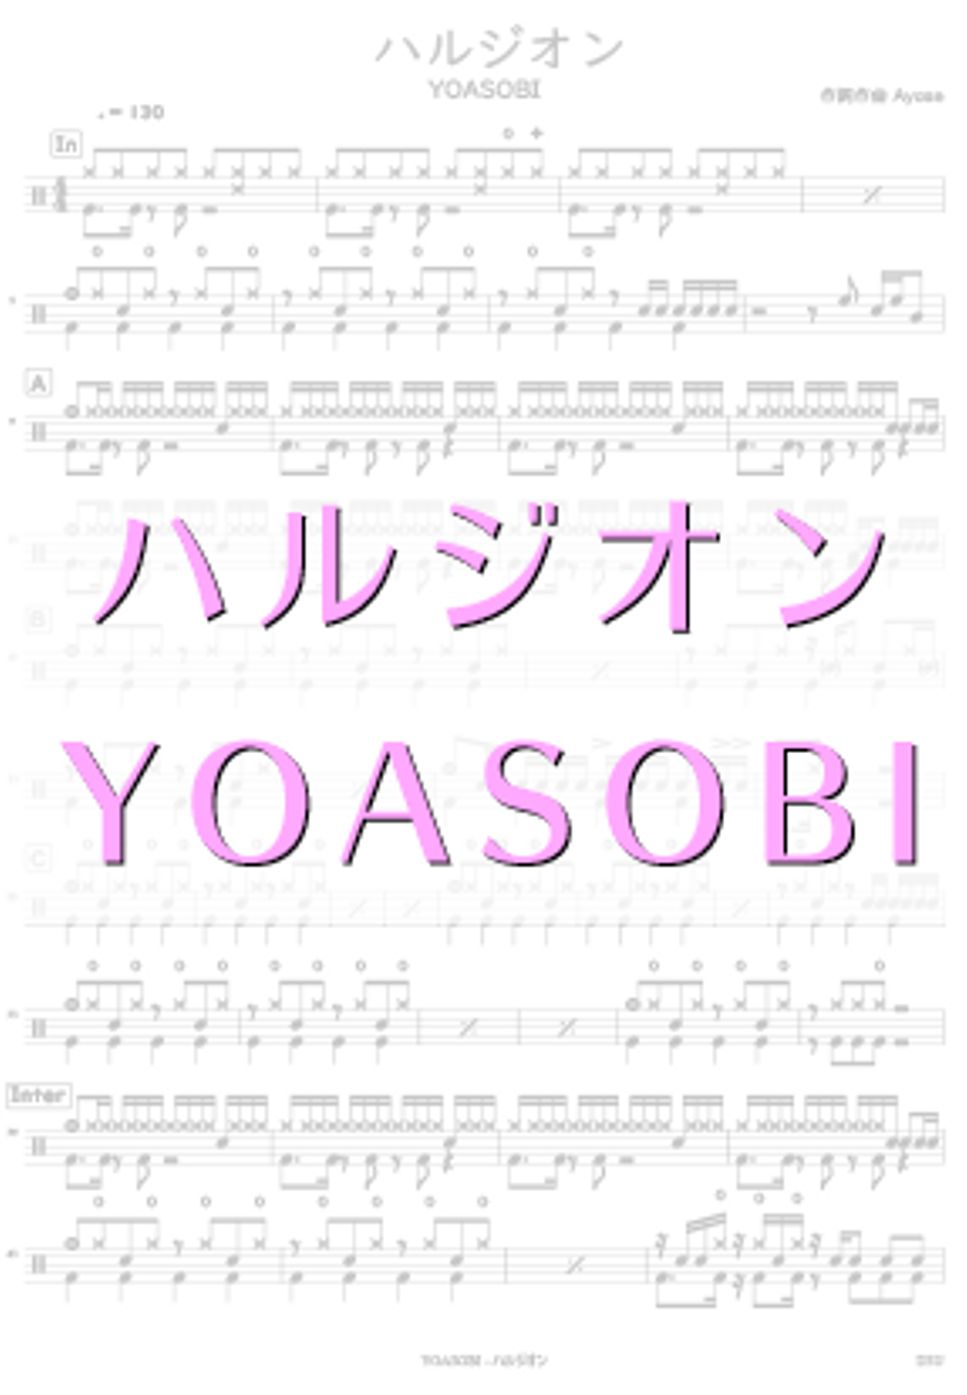 YOASOBI - ハルジオン by DSU